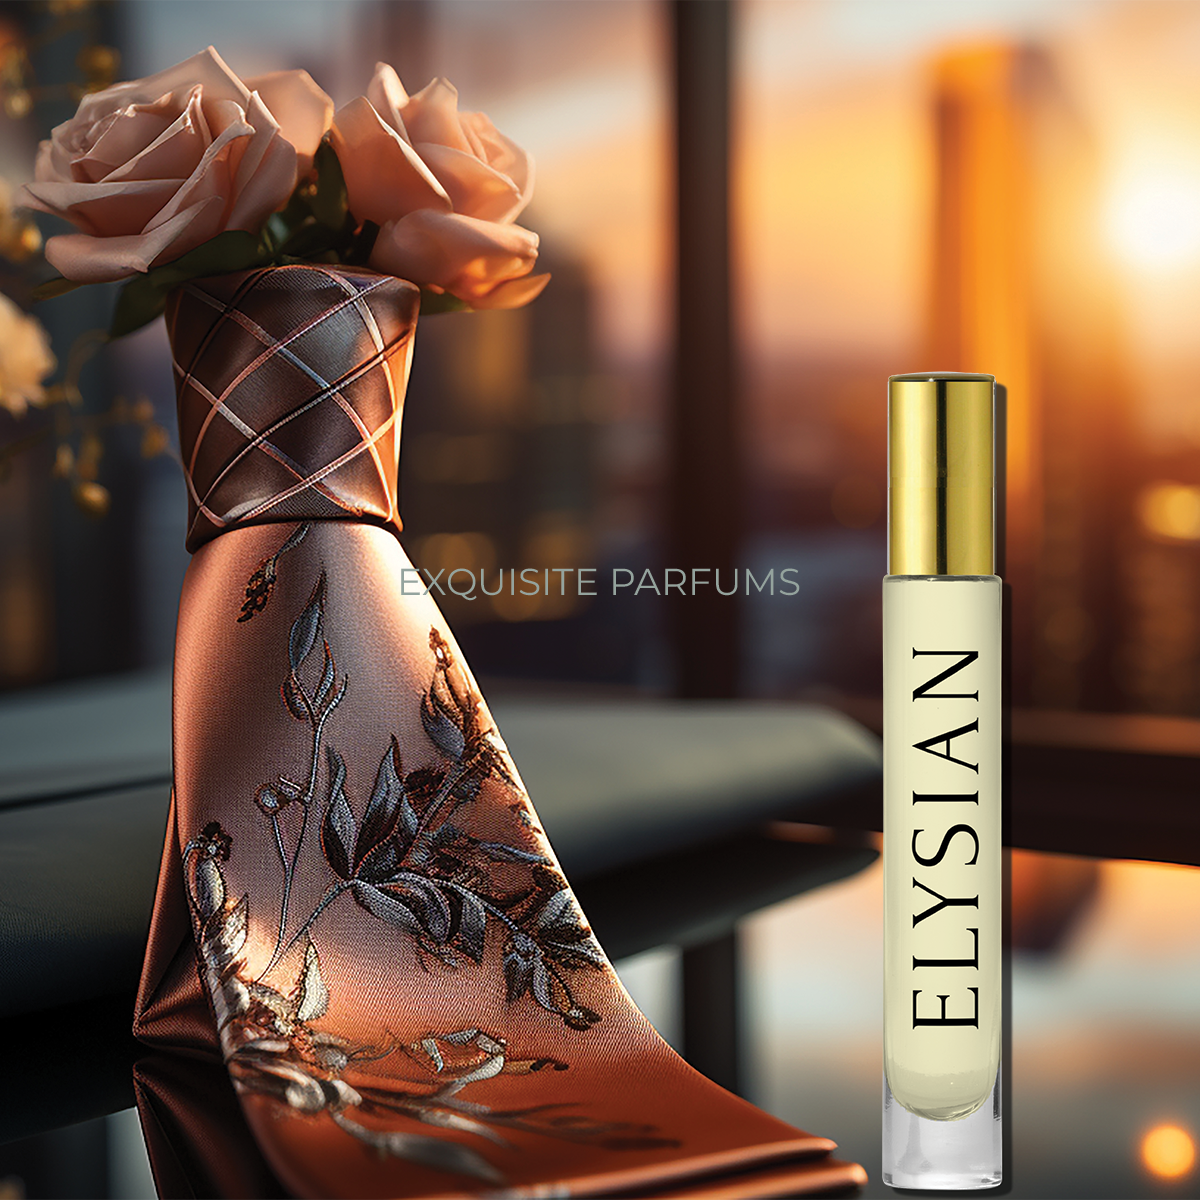 Exquisite Elysian Absolute Luxury Perfume Oils